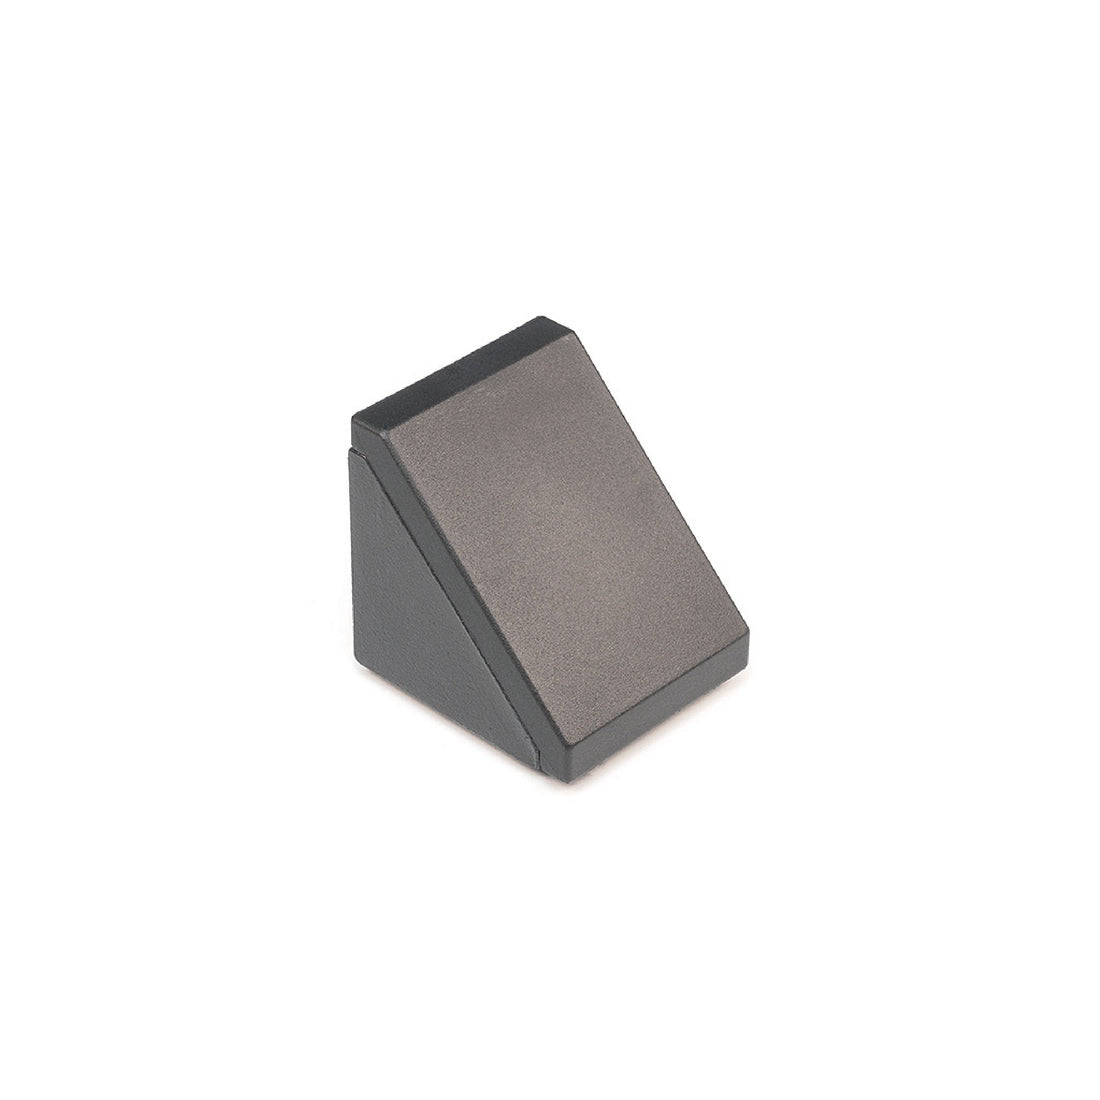 90 Degree 30 series Cast Aluminium Corner Brackets 3030 with plastic Black cover